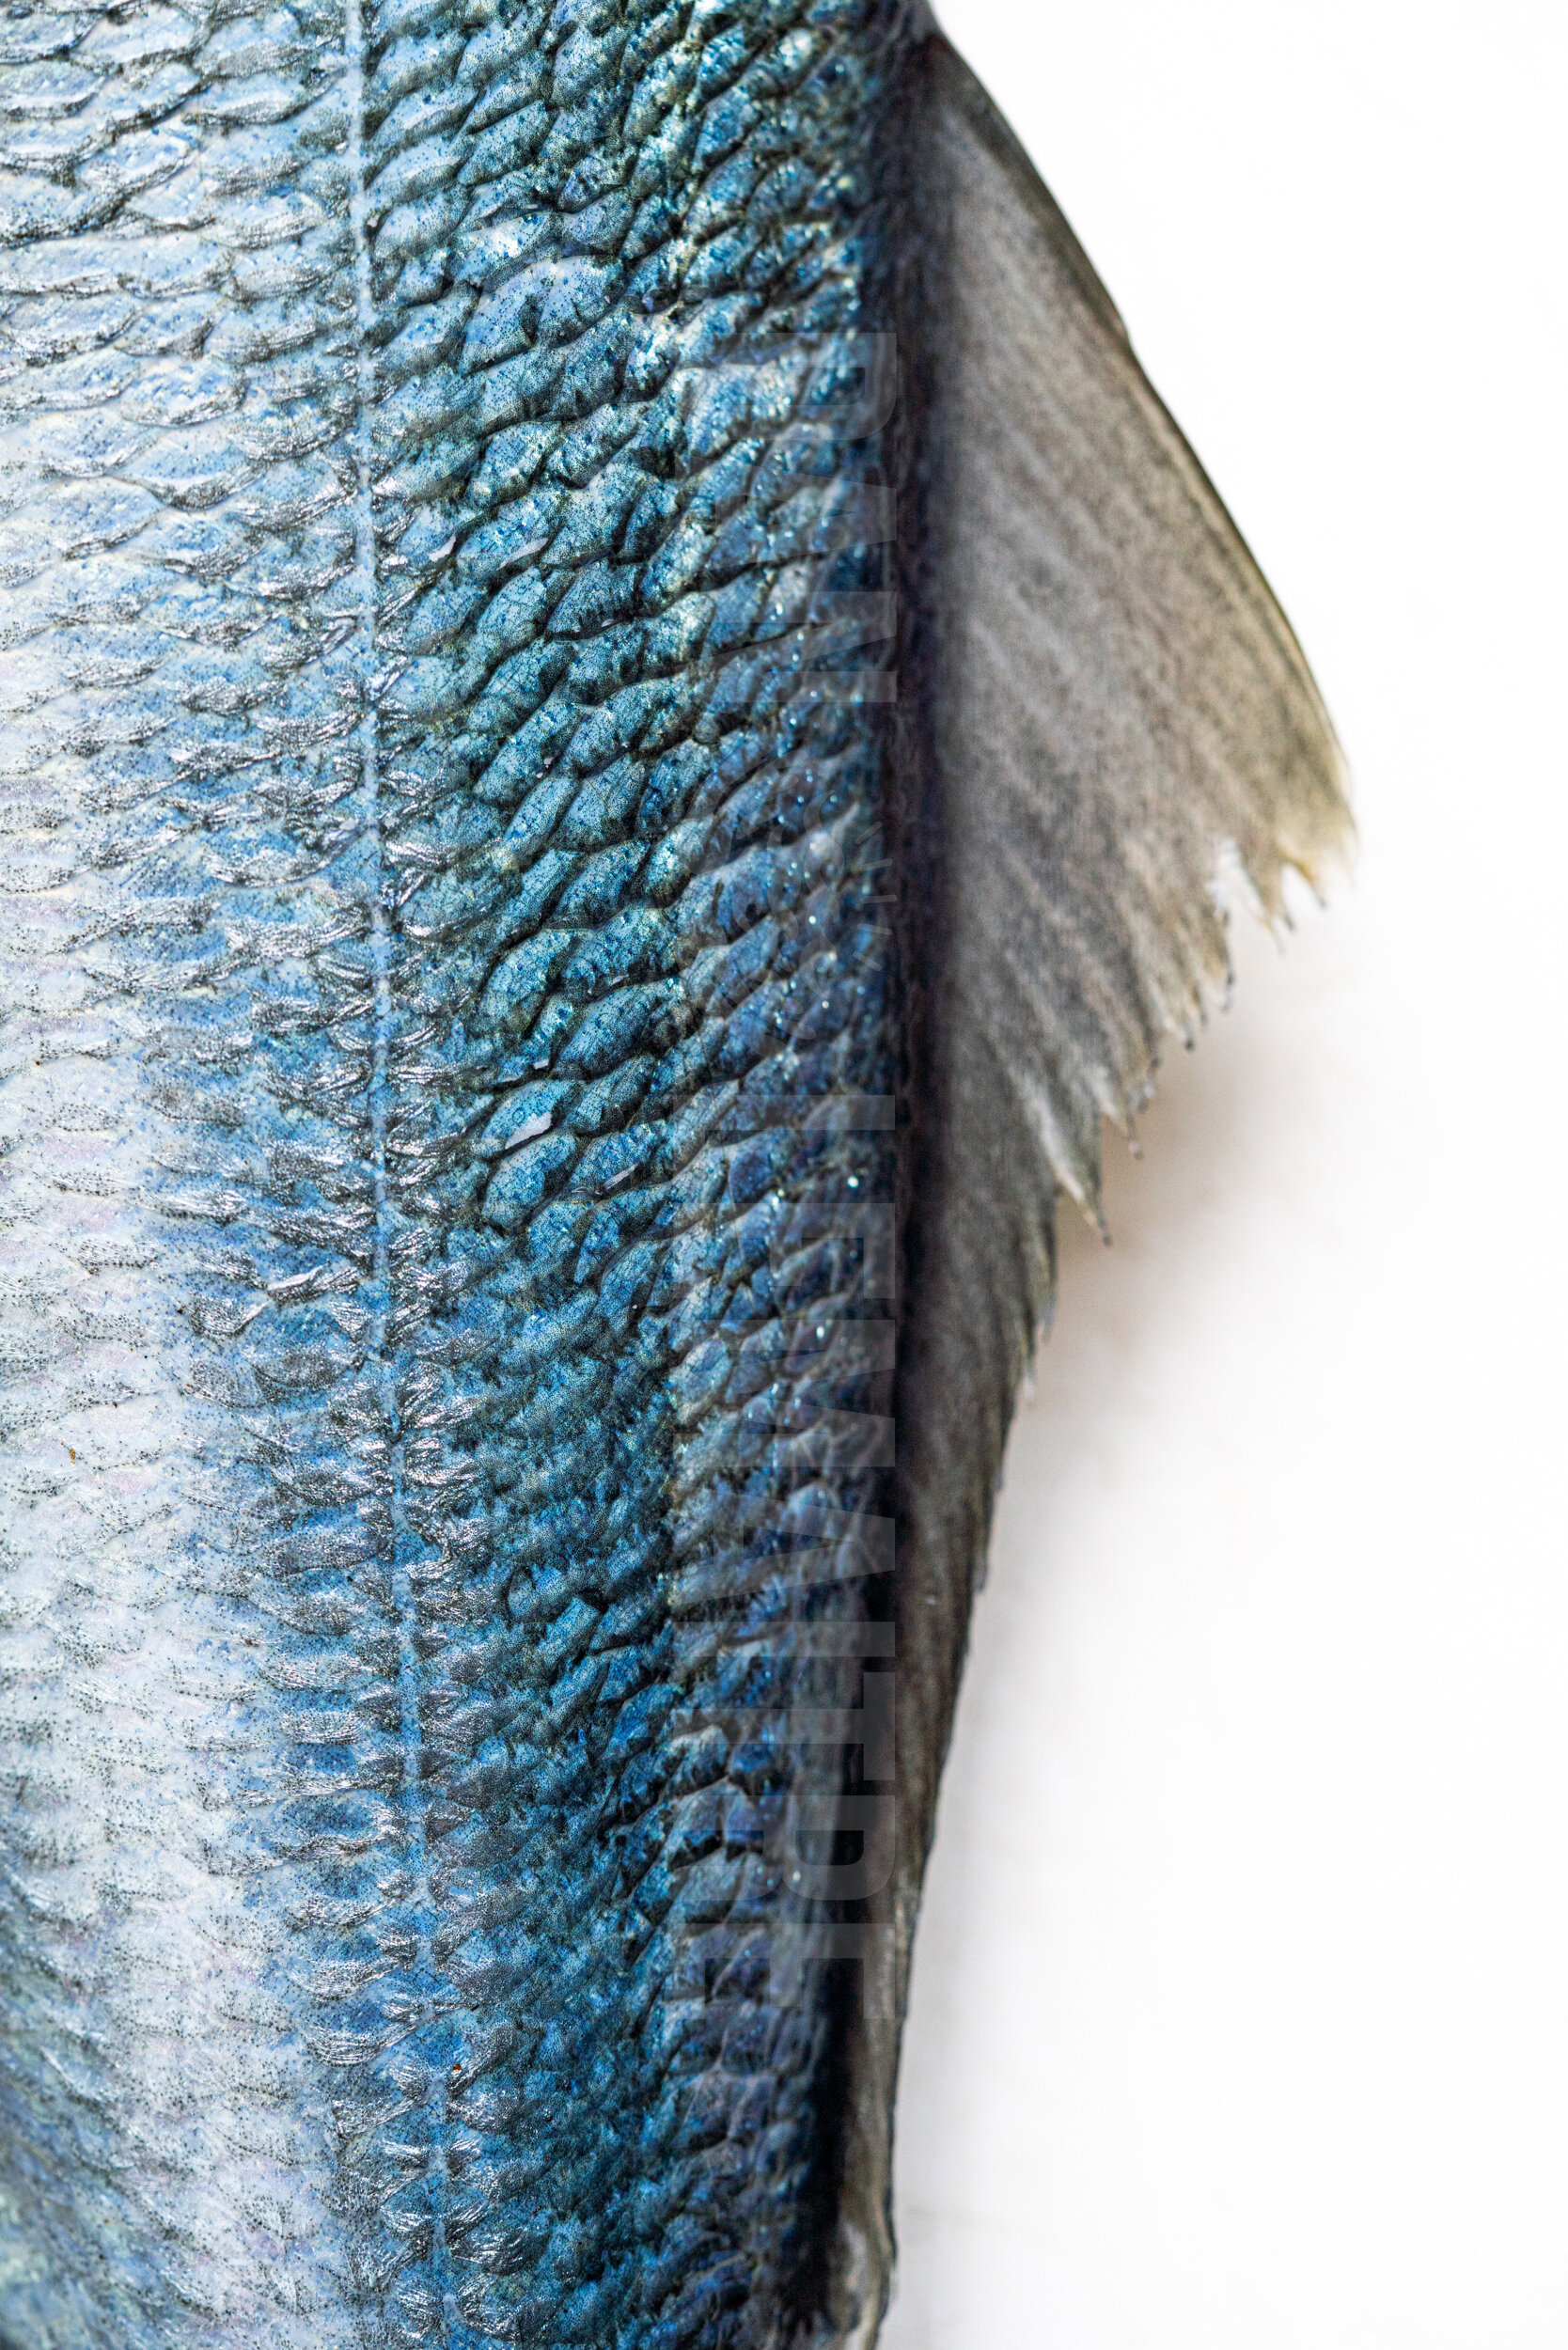 Bluefish Texture